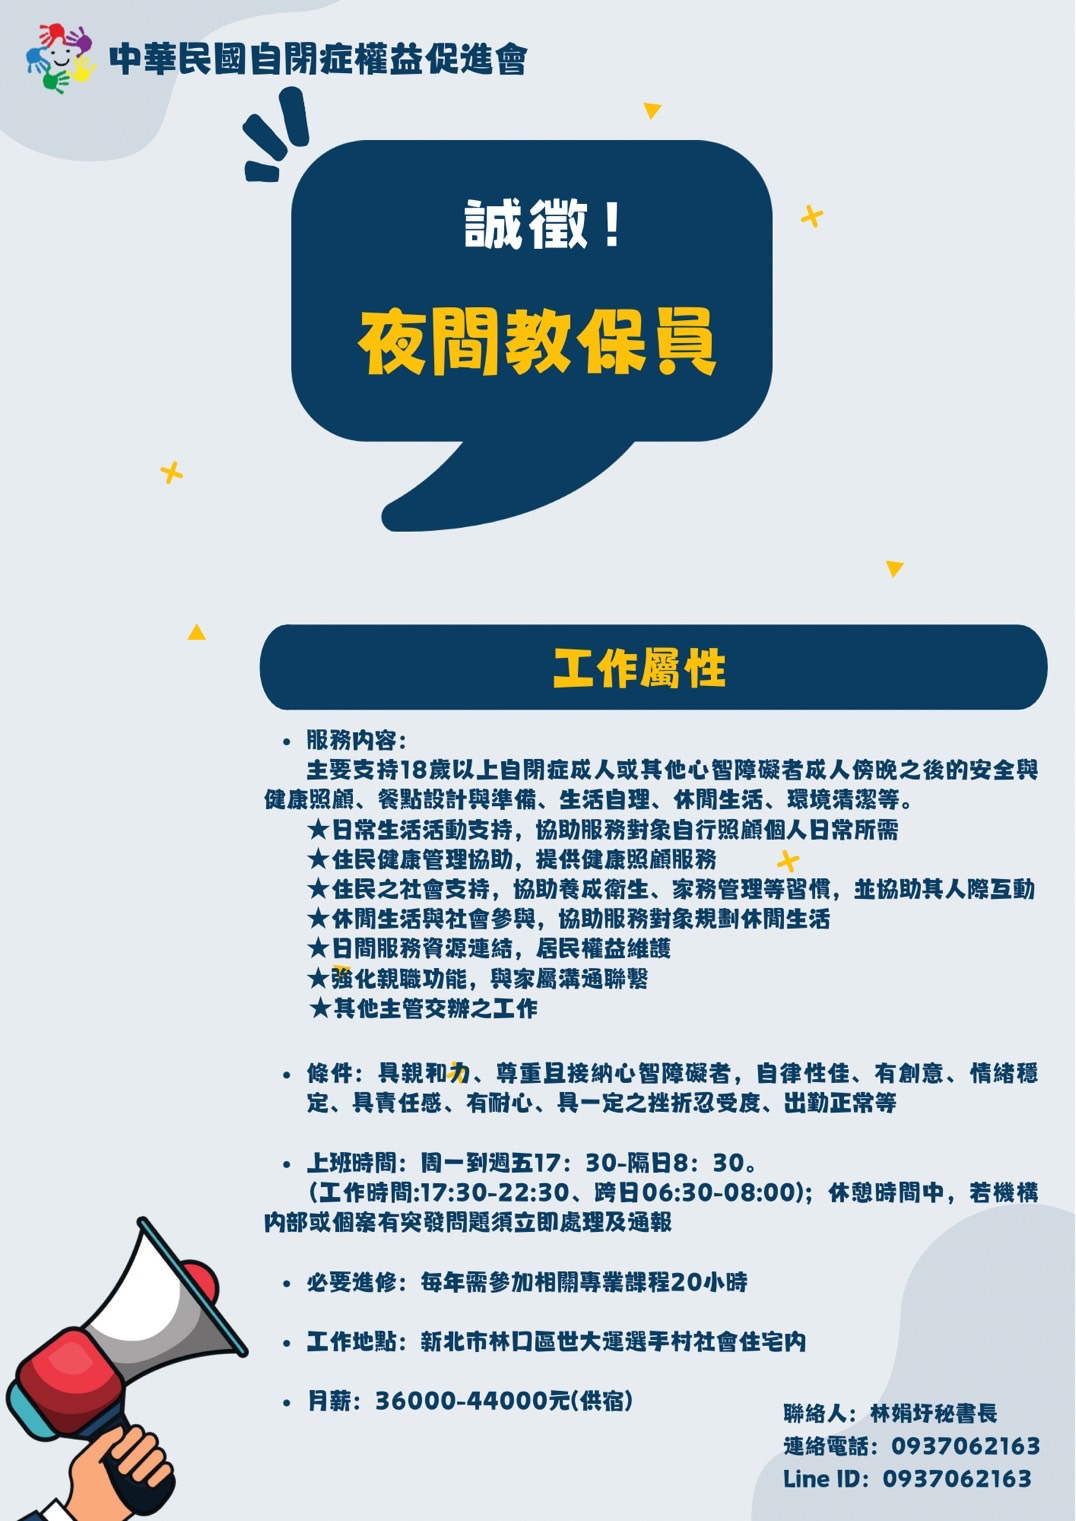 Featured image for “中華民國自閉症權益促進會誠徵”夜間教保員””